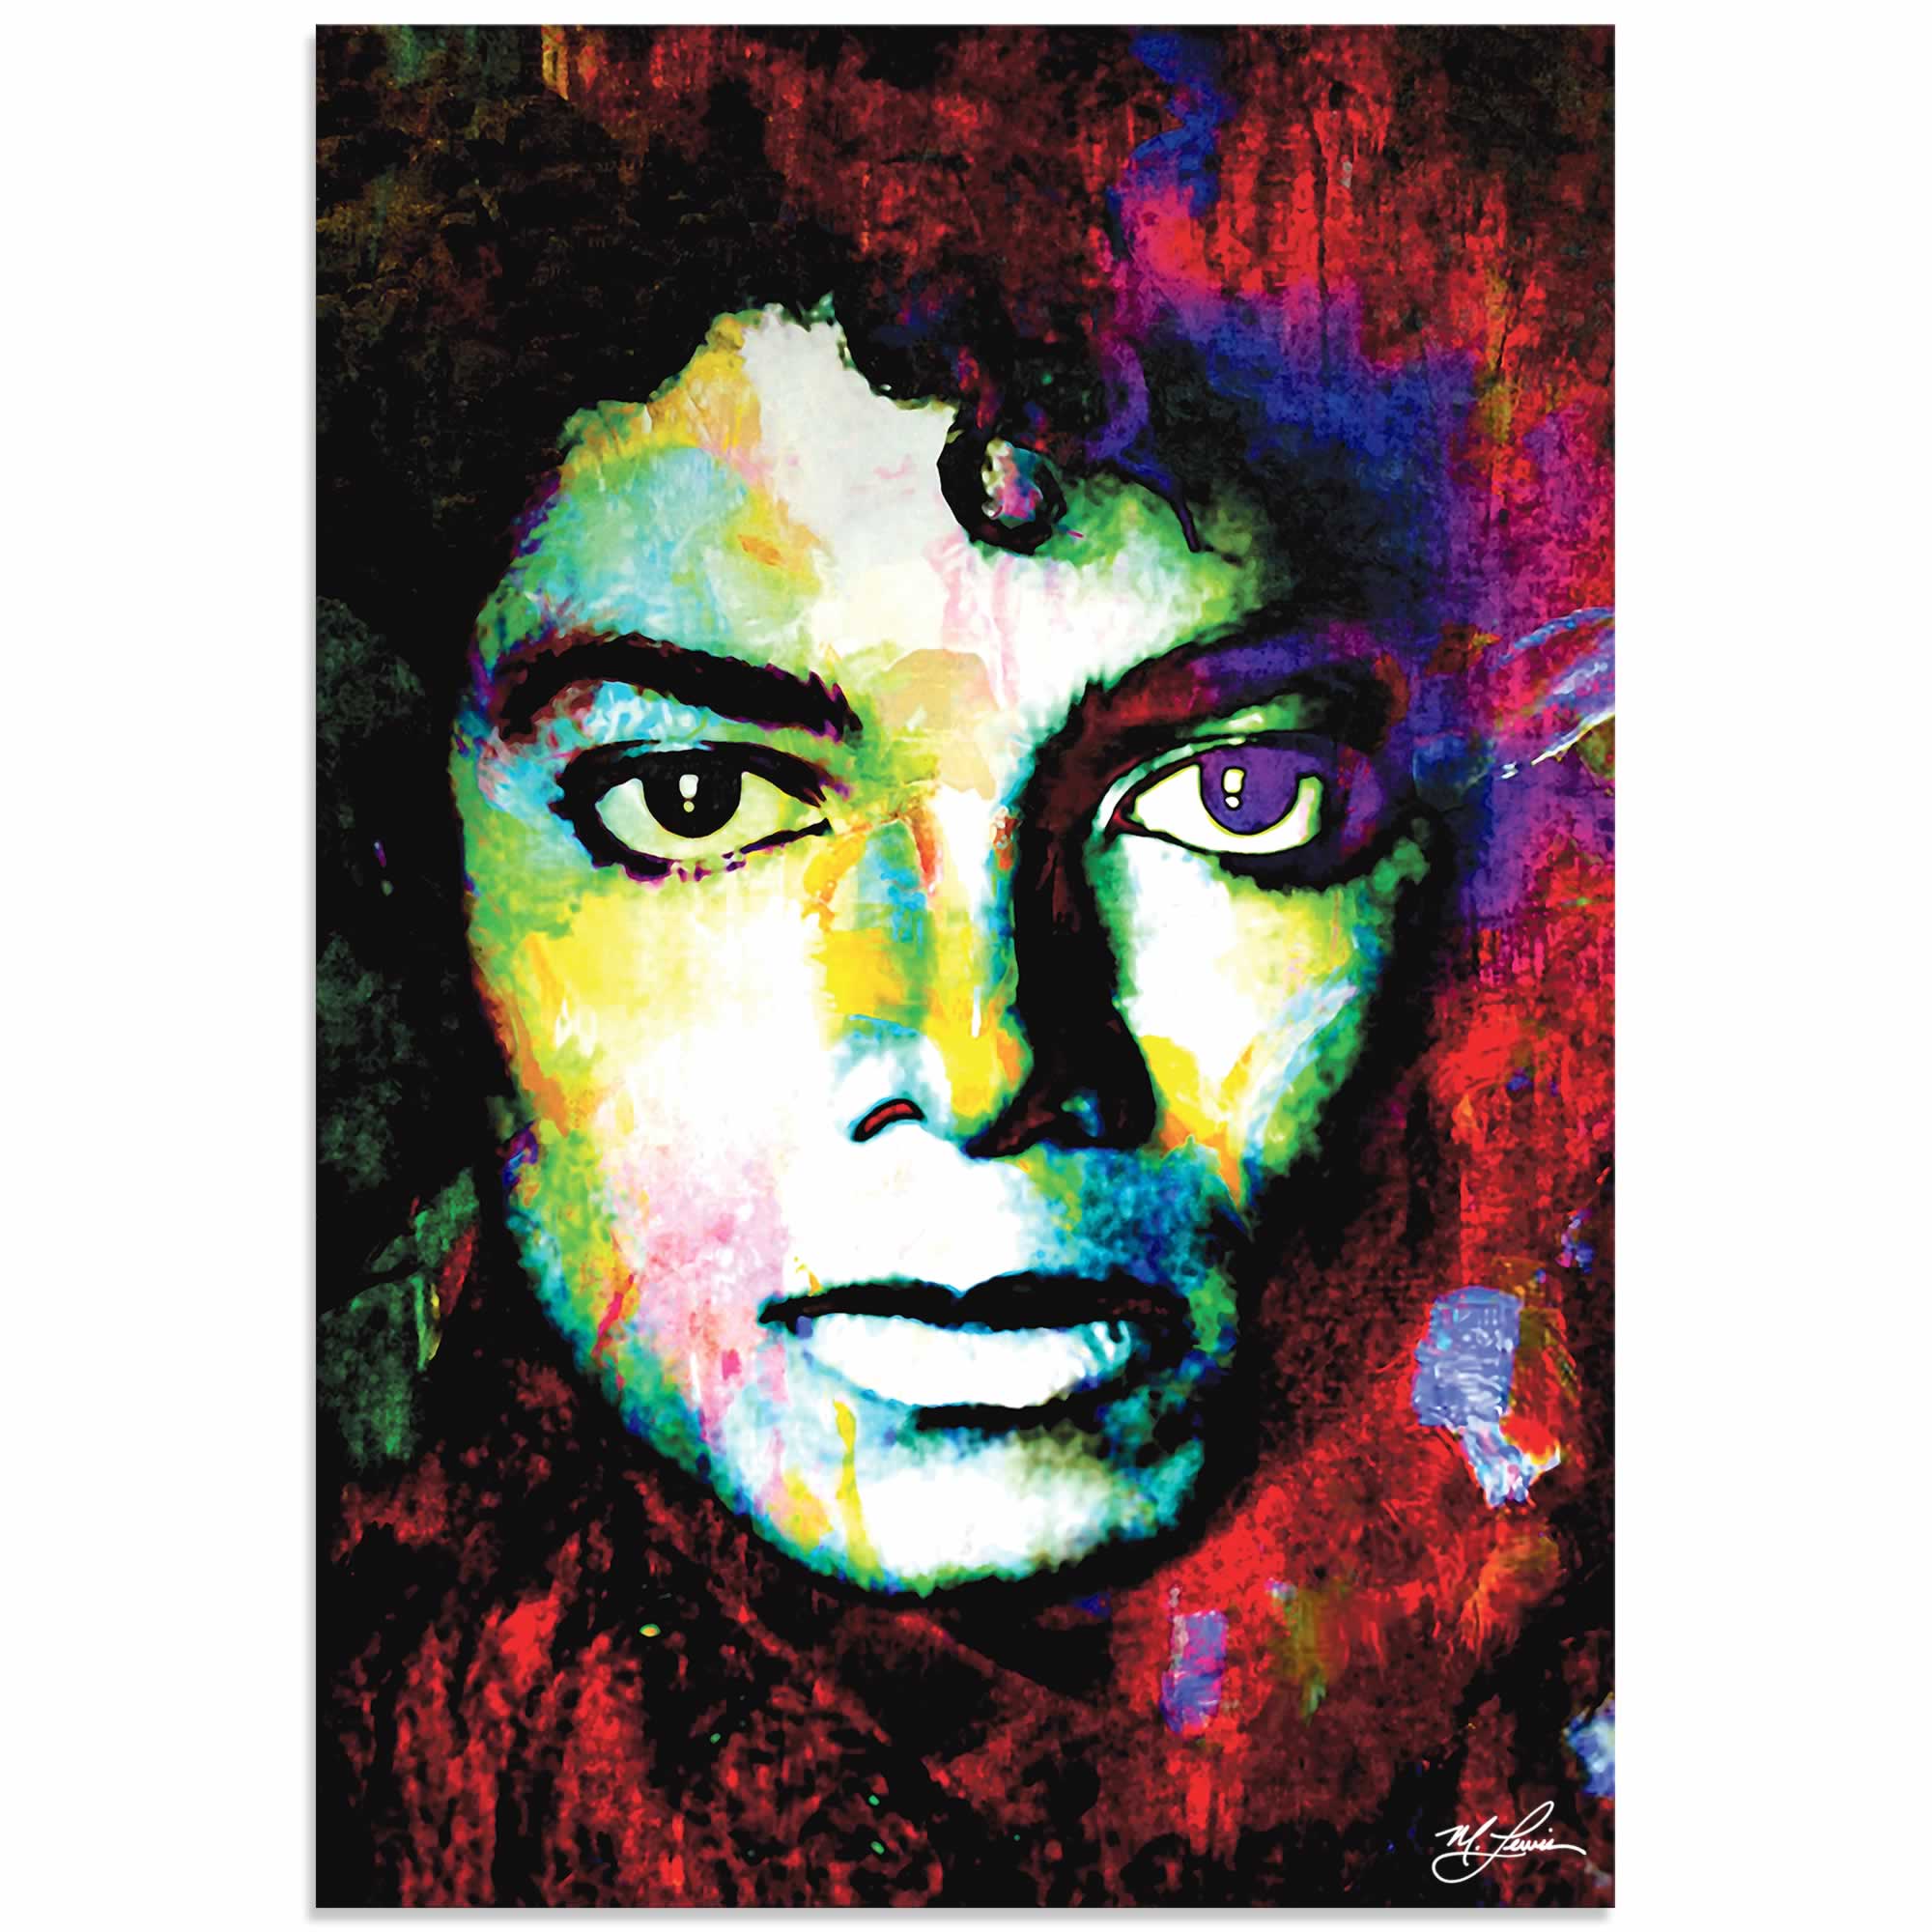 Michael Jackson Study 1 by Mark Lewis - Celebrity Pop Art on Metal or Plexiglass 